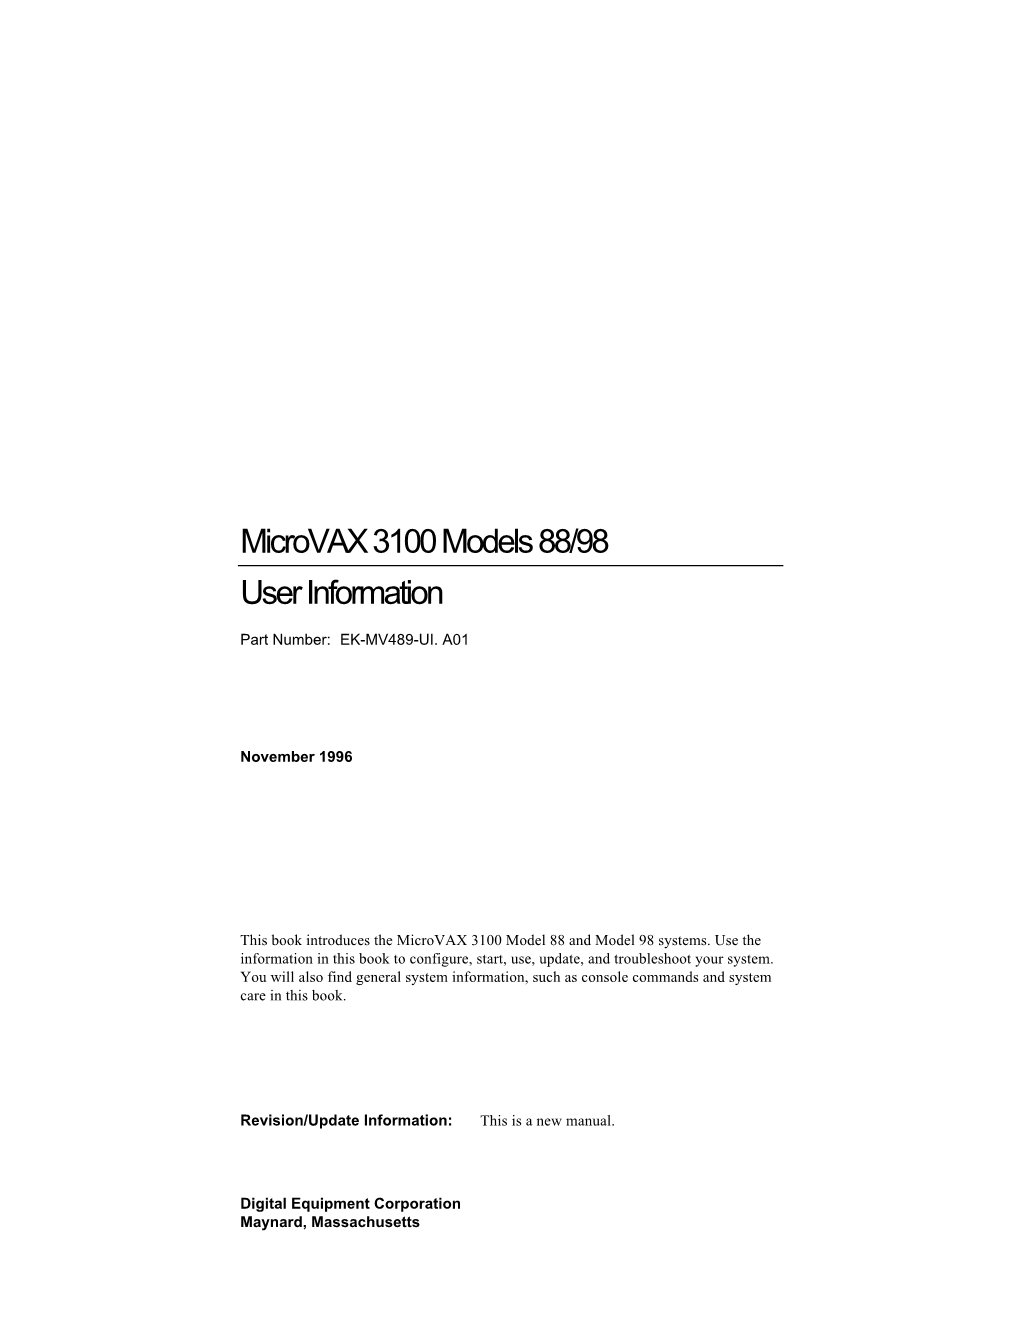 Microvax 3100 Models 88/98 User Information